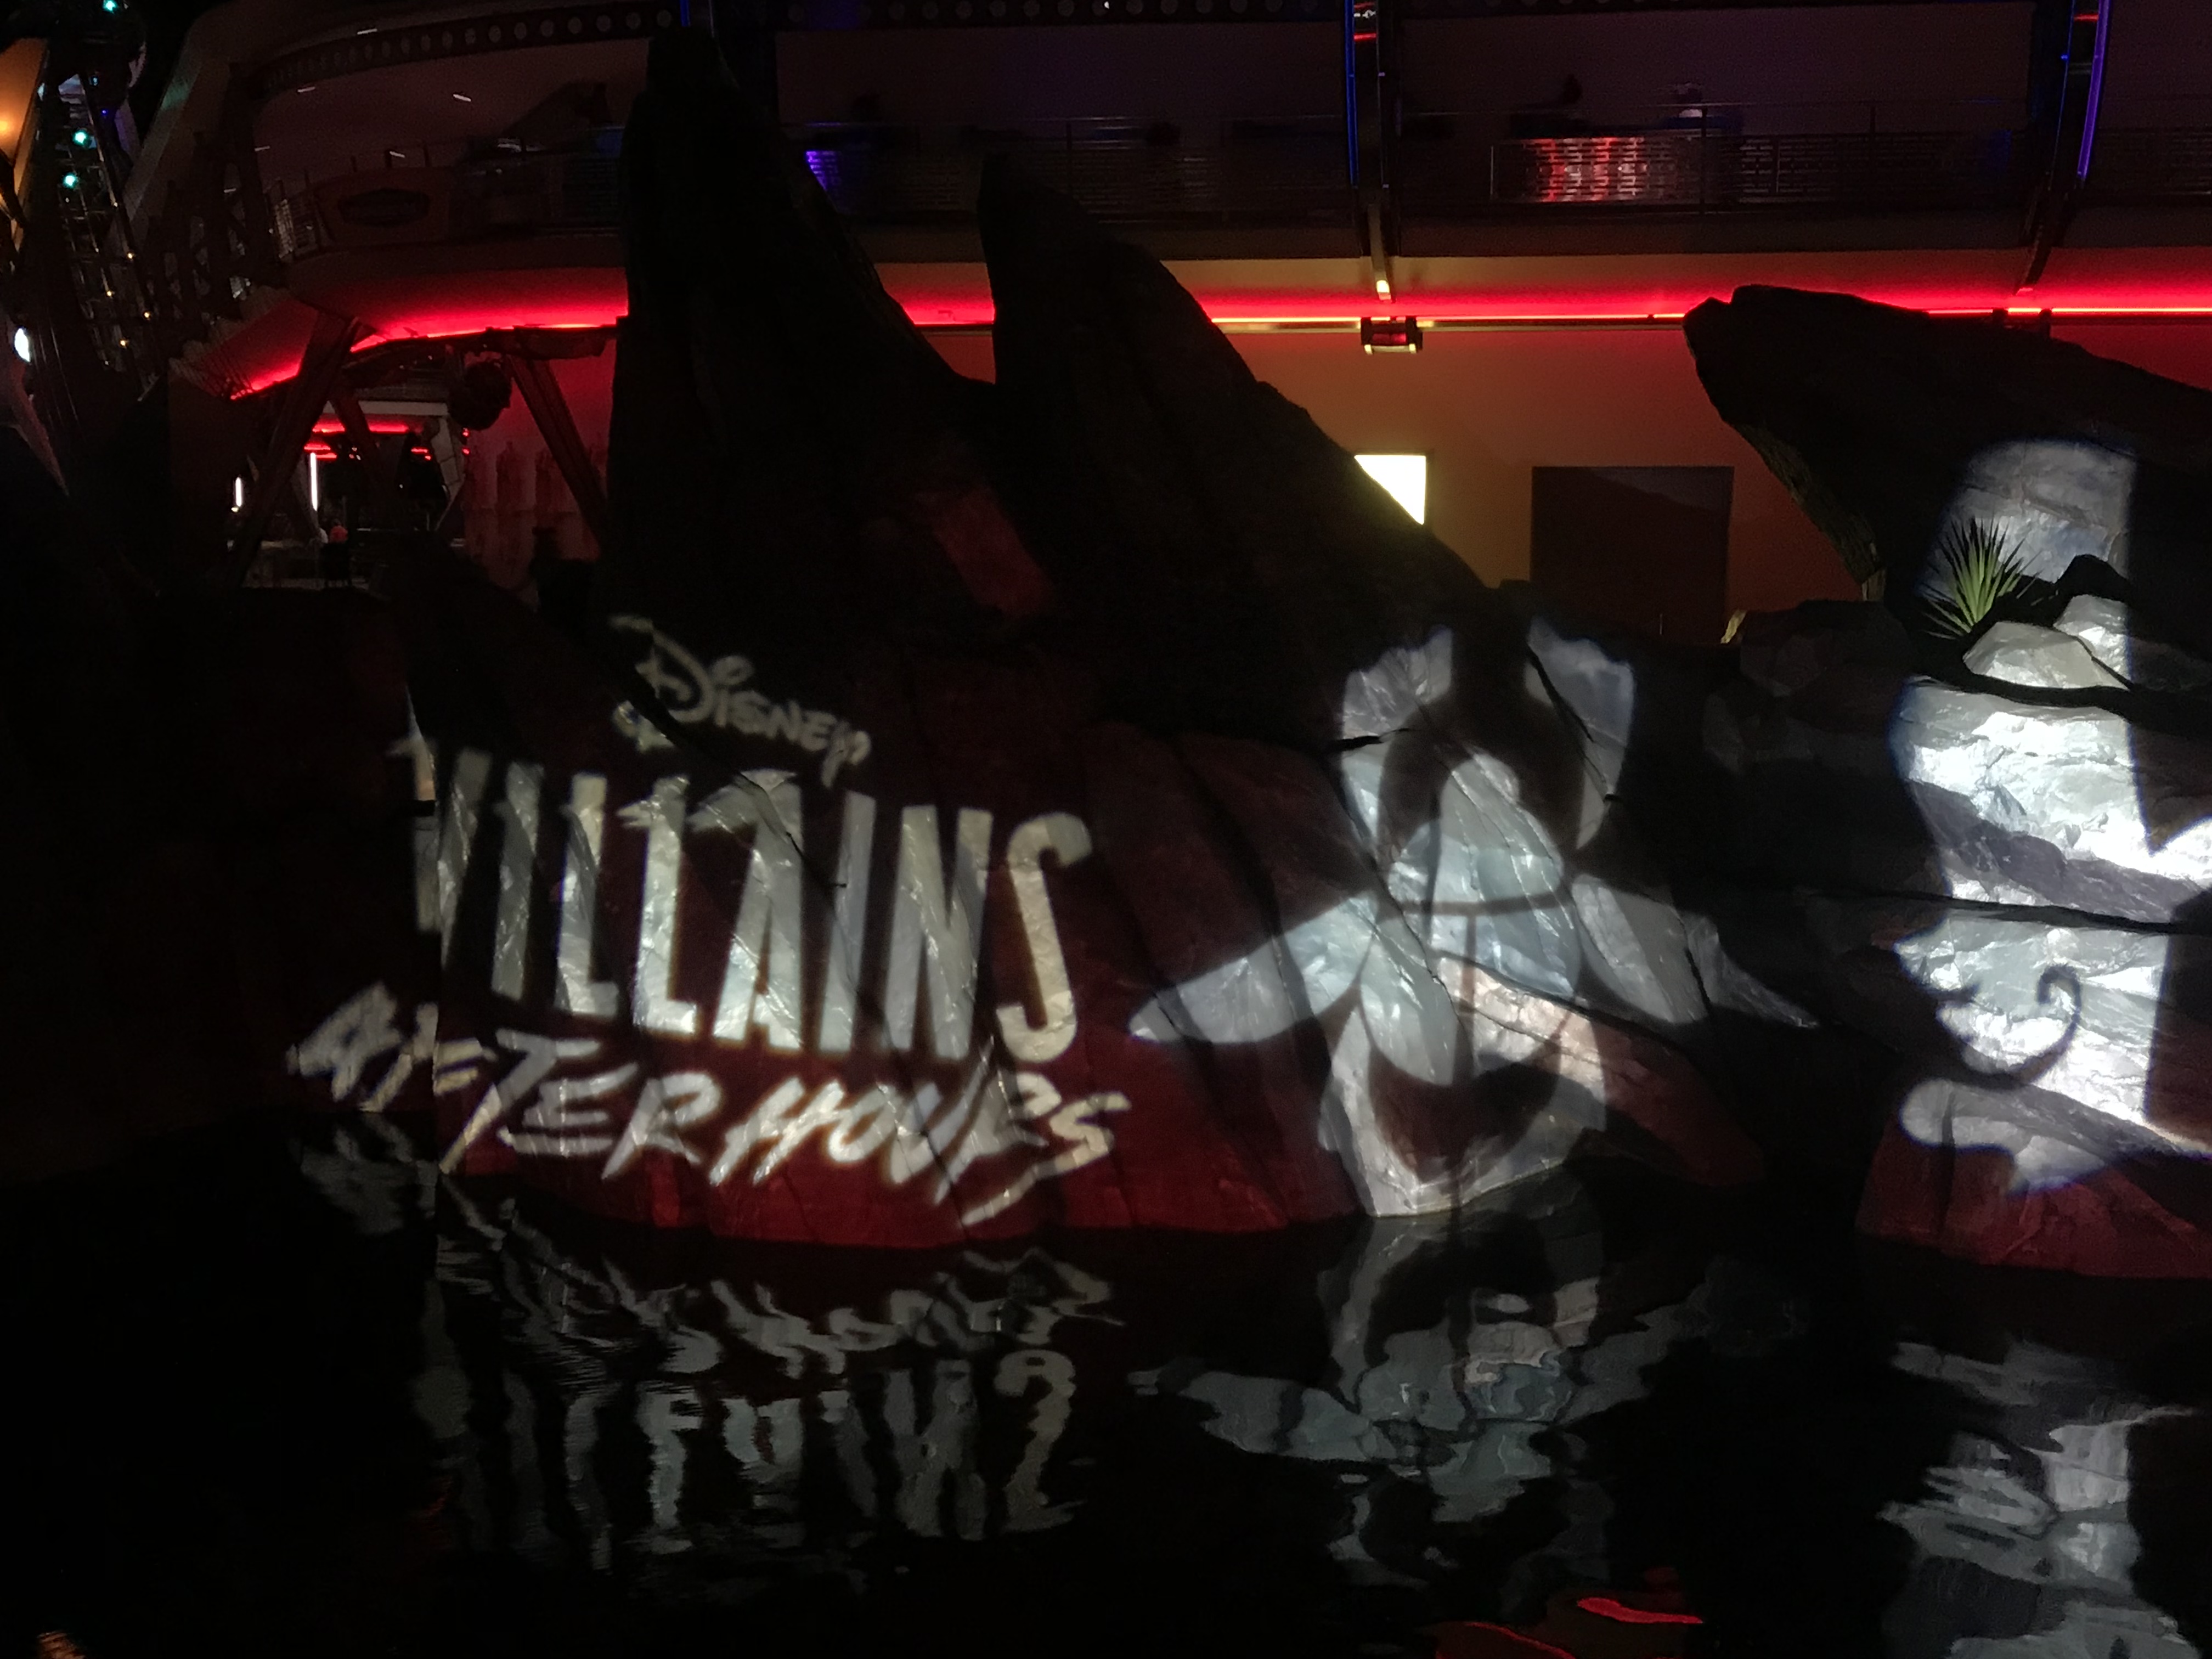 Villains After Dark at Disney's Magic Kingdom